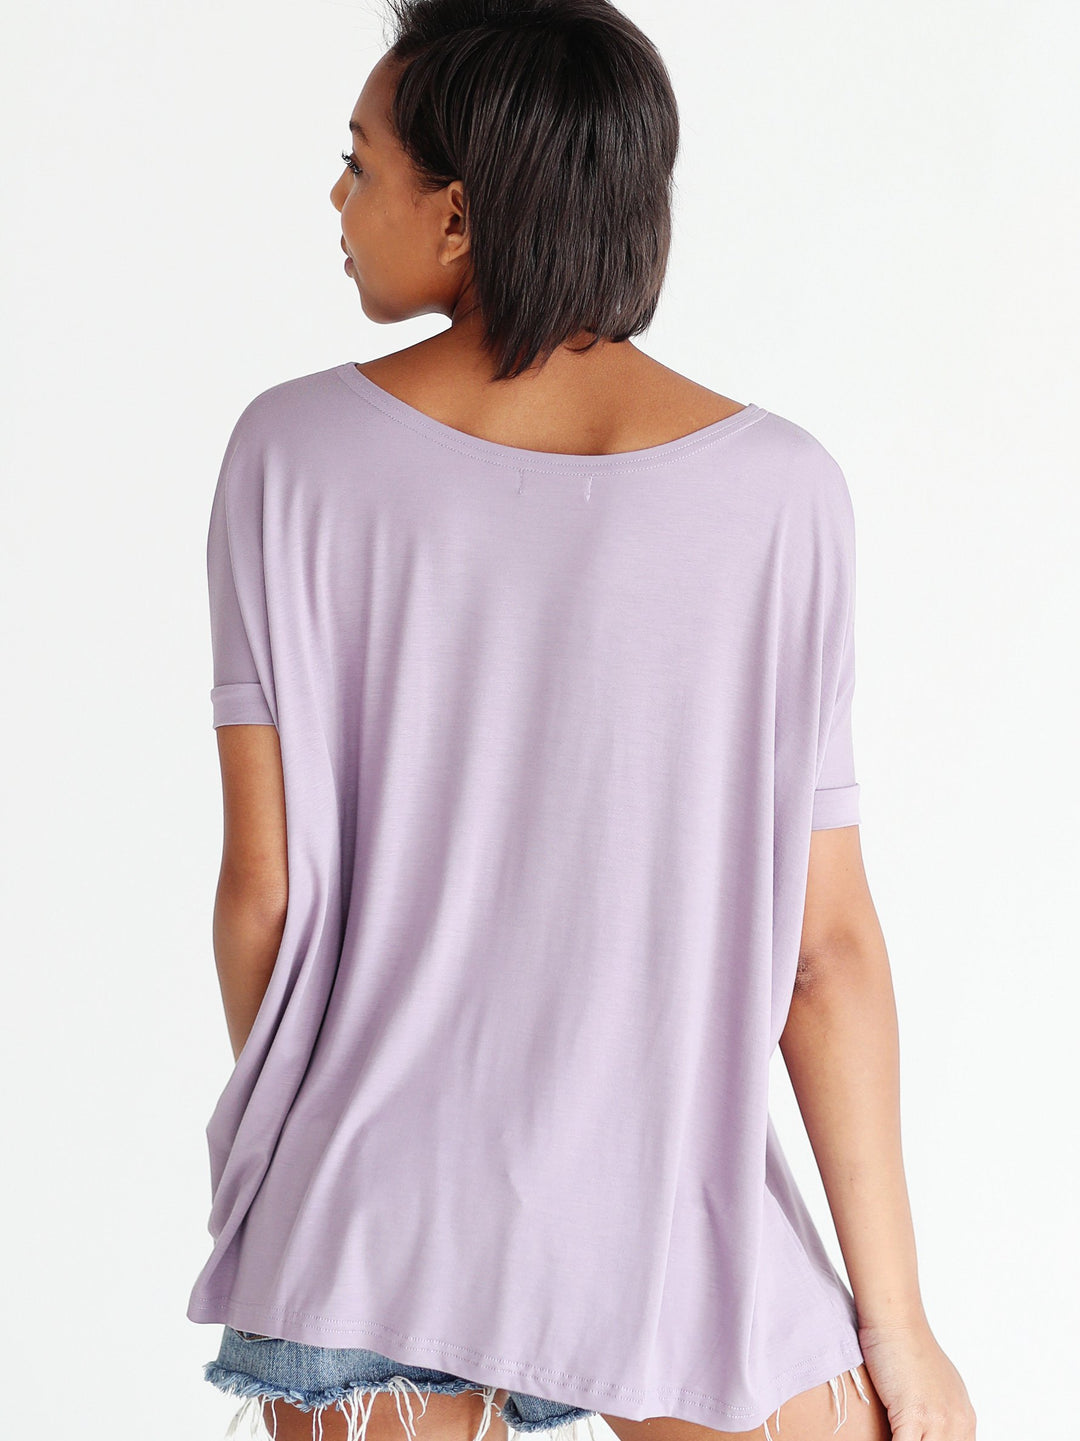 Light Purple Short Sleeve Top